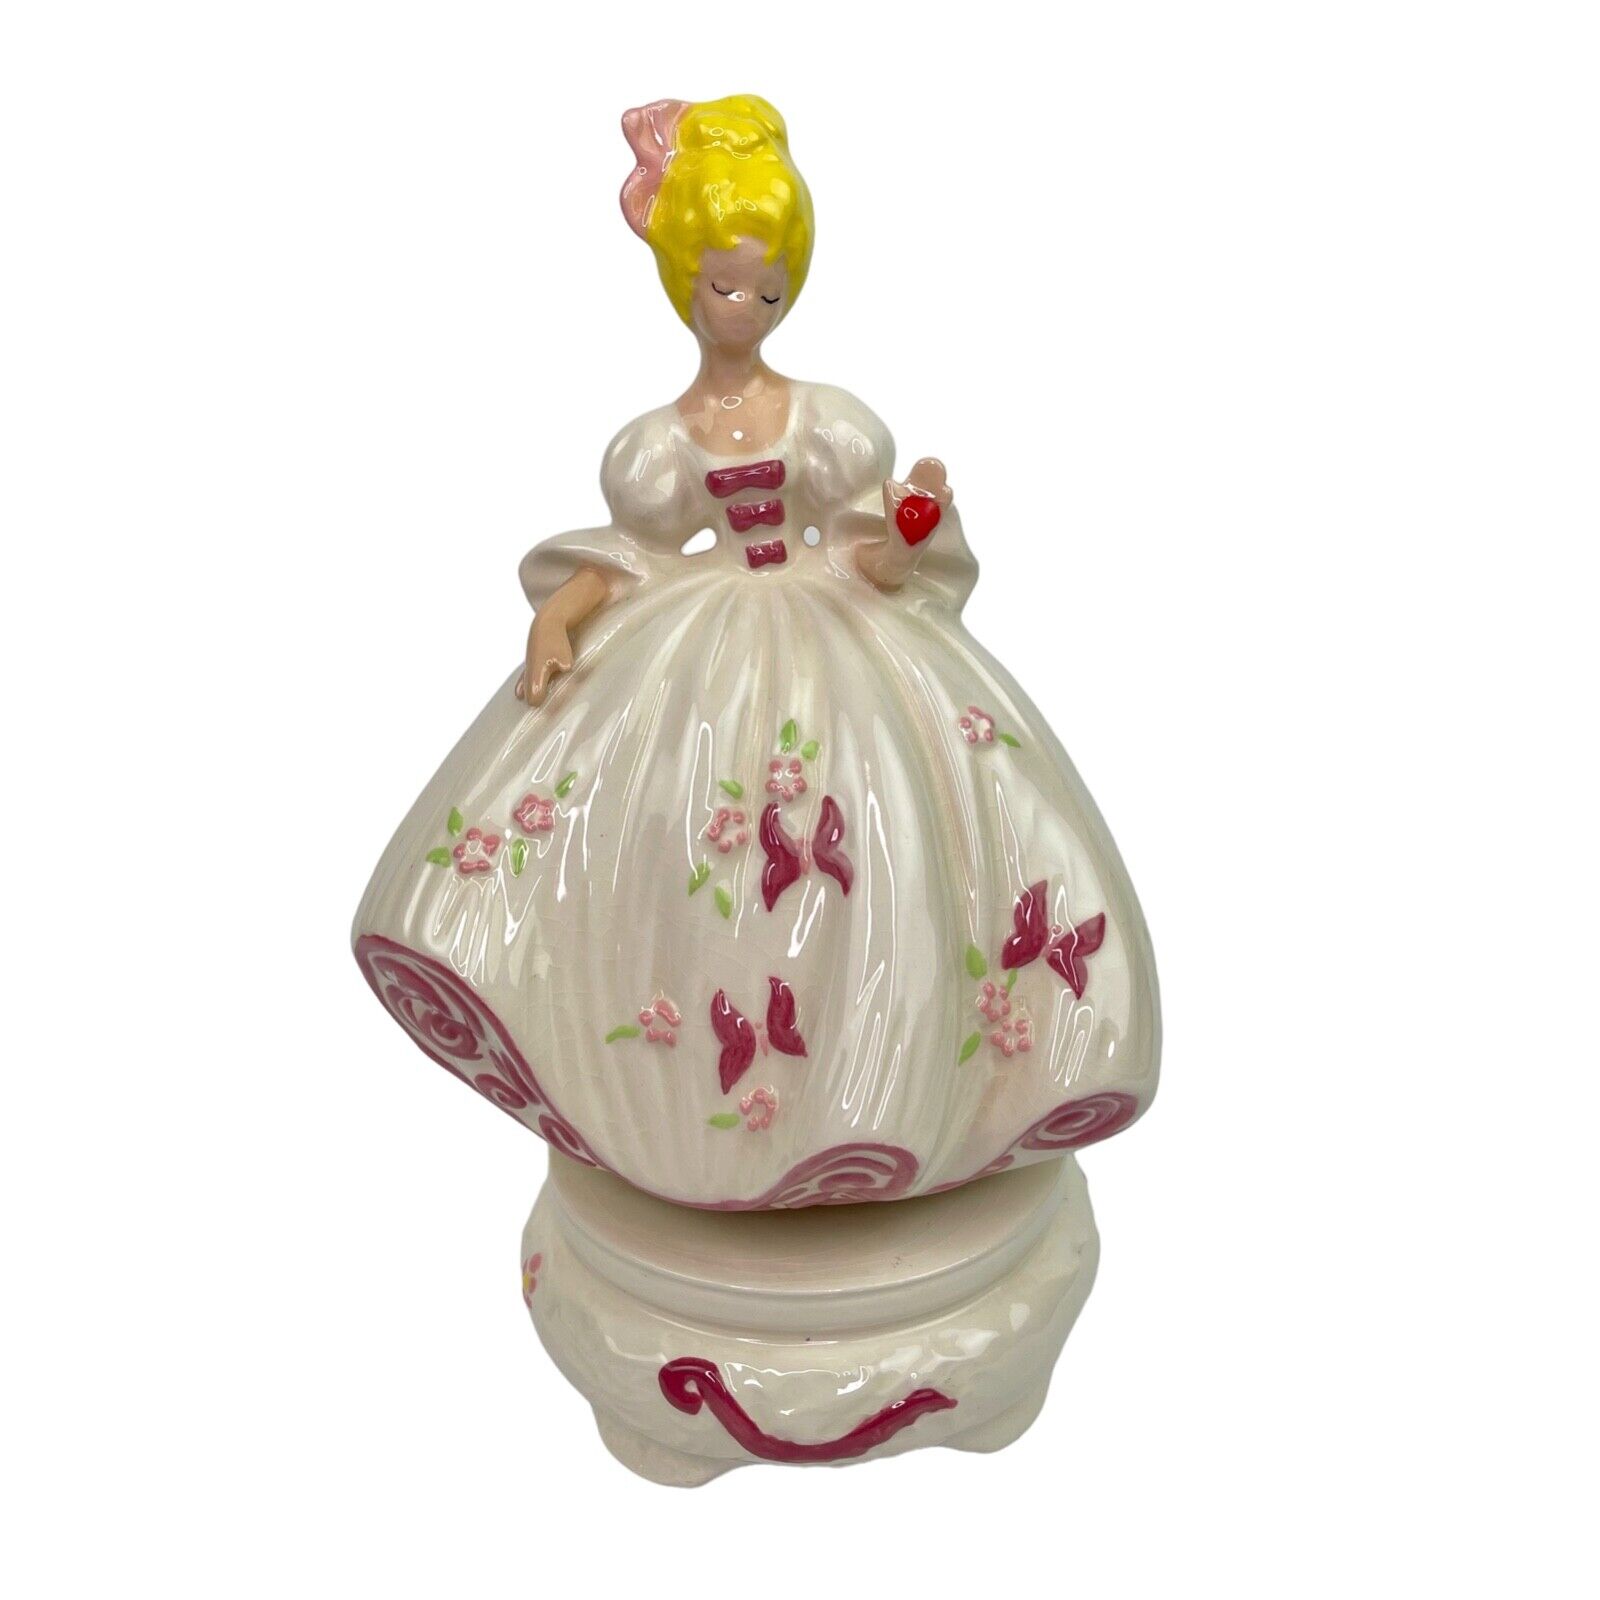 Vintage Dancing Princess Spinning Ceramic Music Box Tested Working